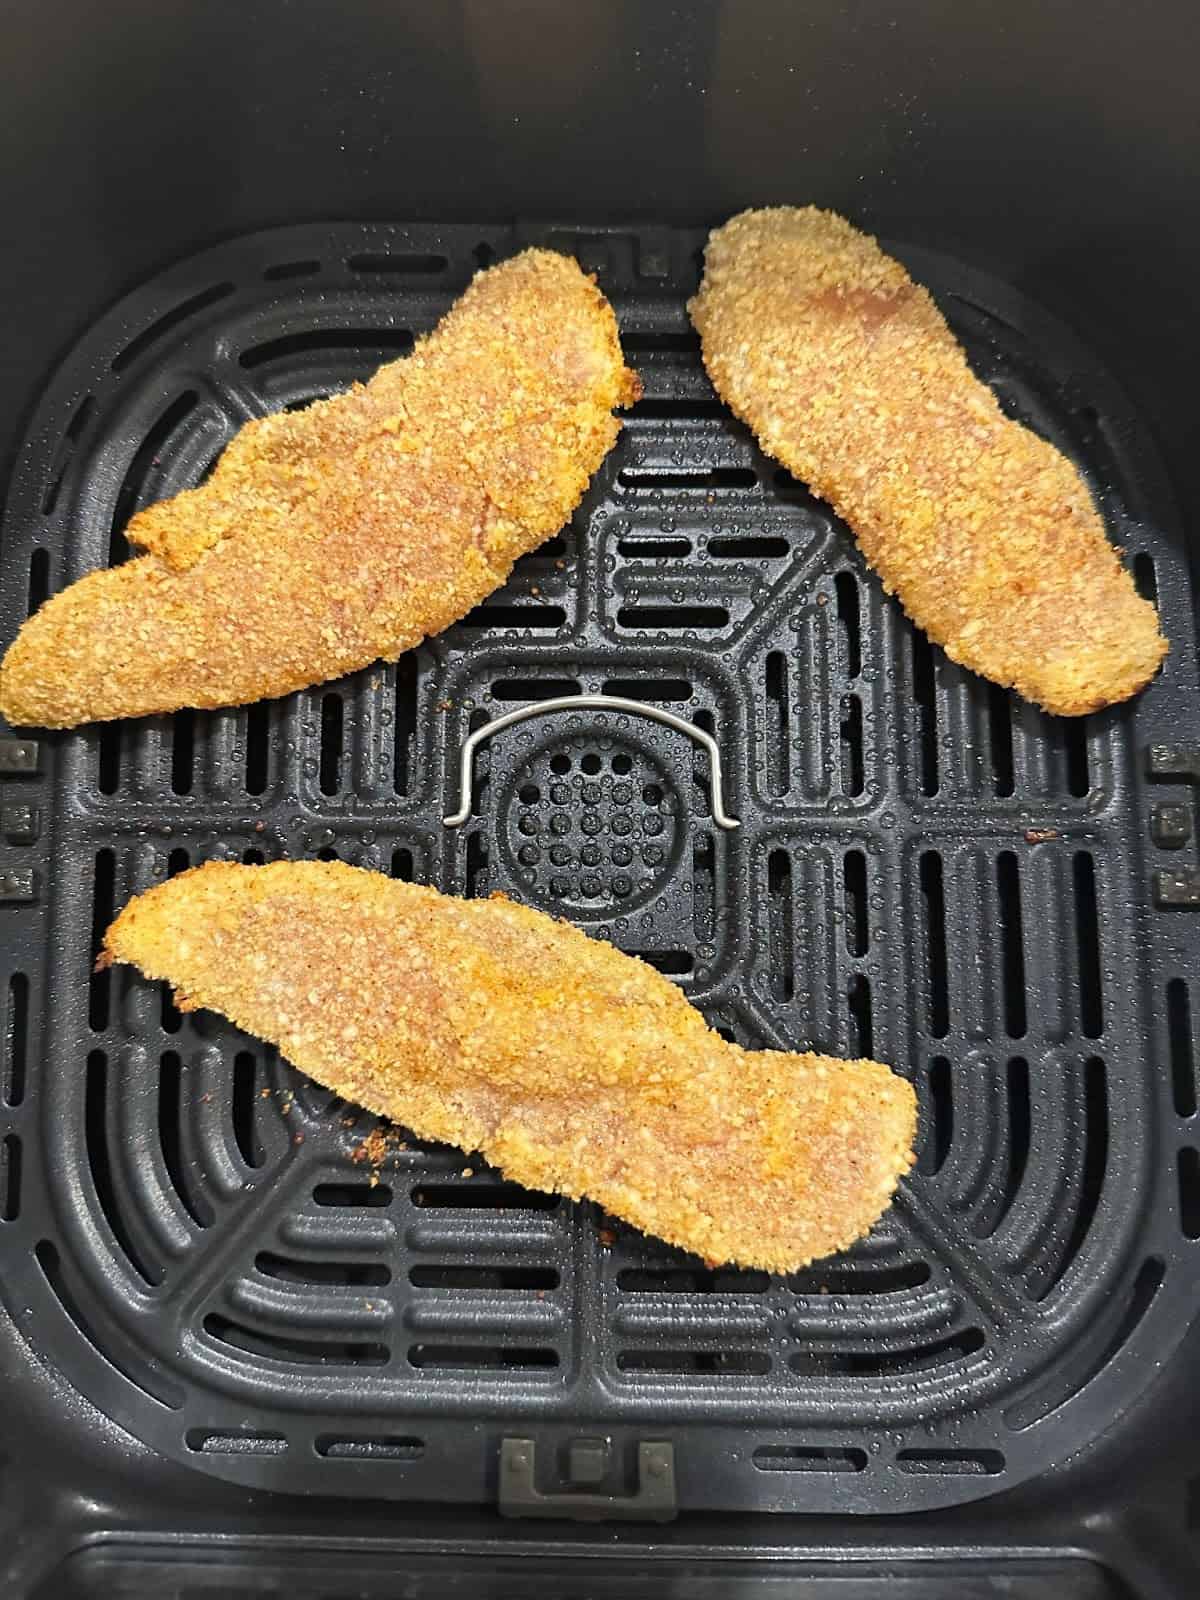 Raw, breaded chicken tenders in the air fryer.